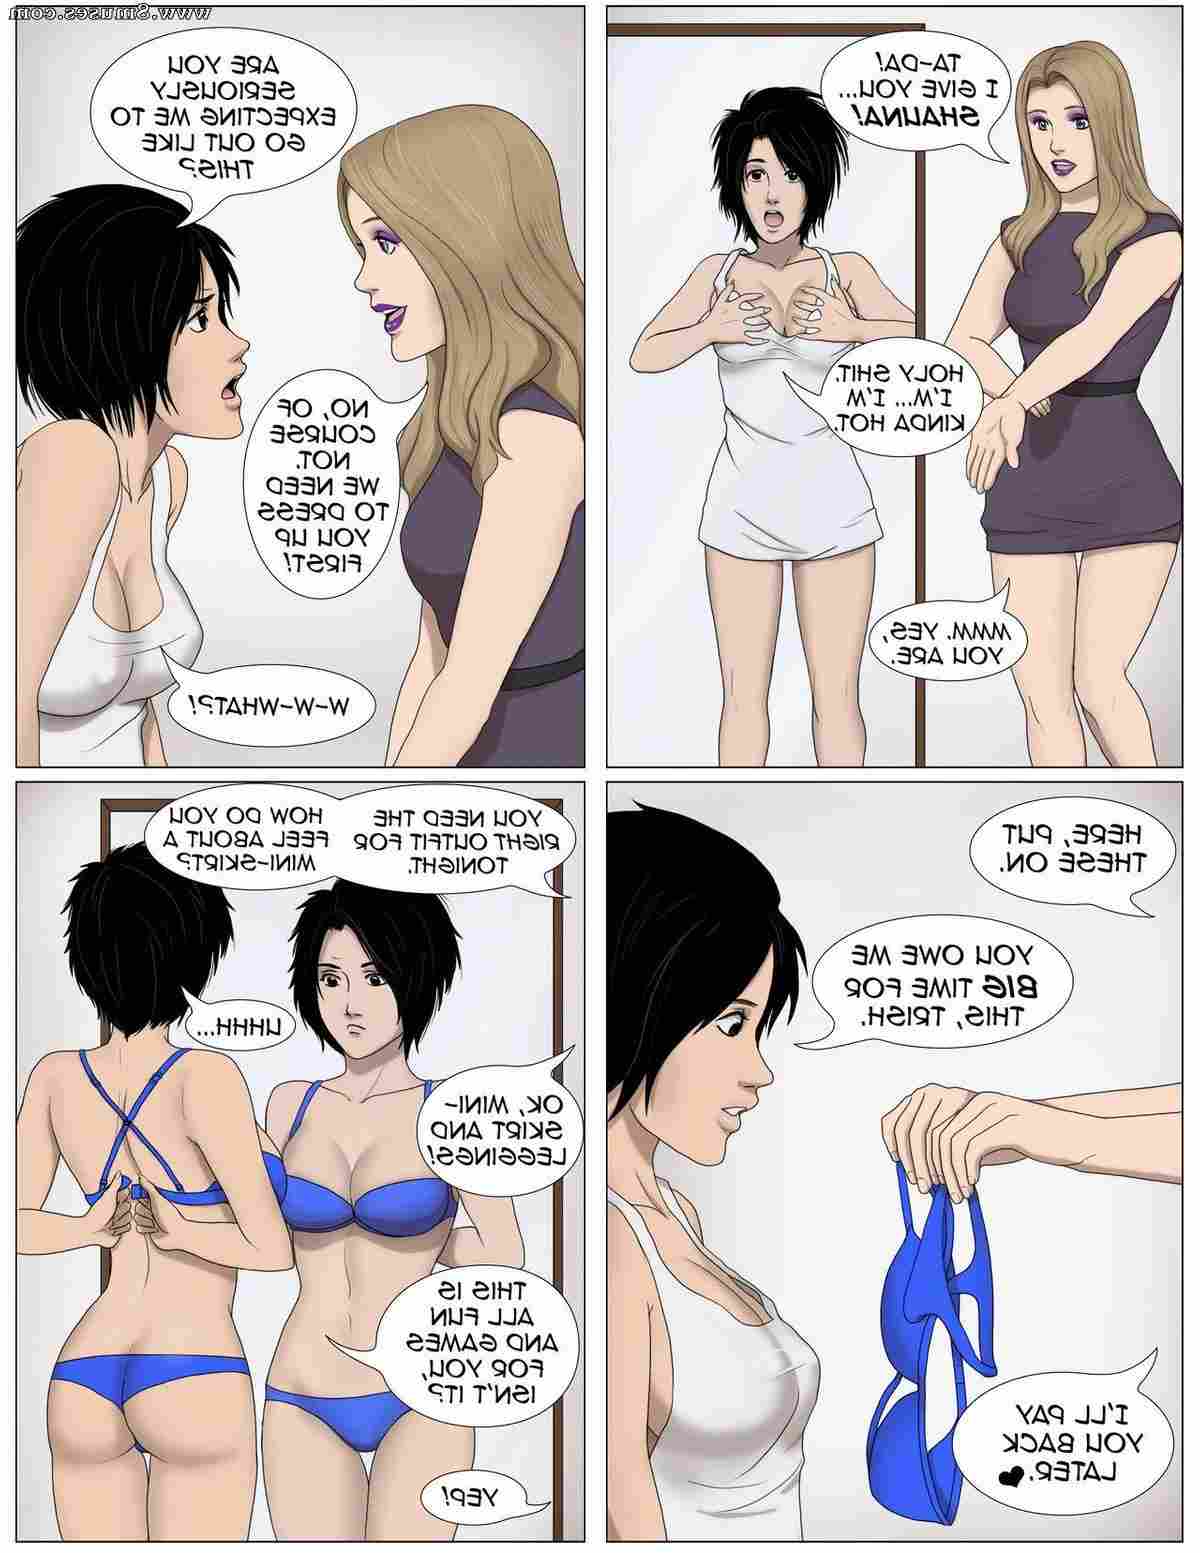 Bisexual Sex Comics - Bi-Curious | Sex Comics